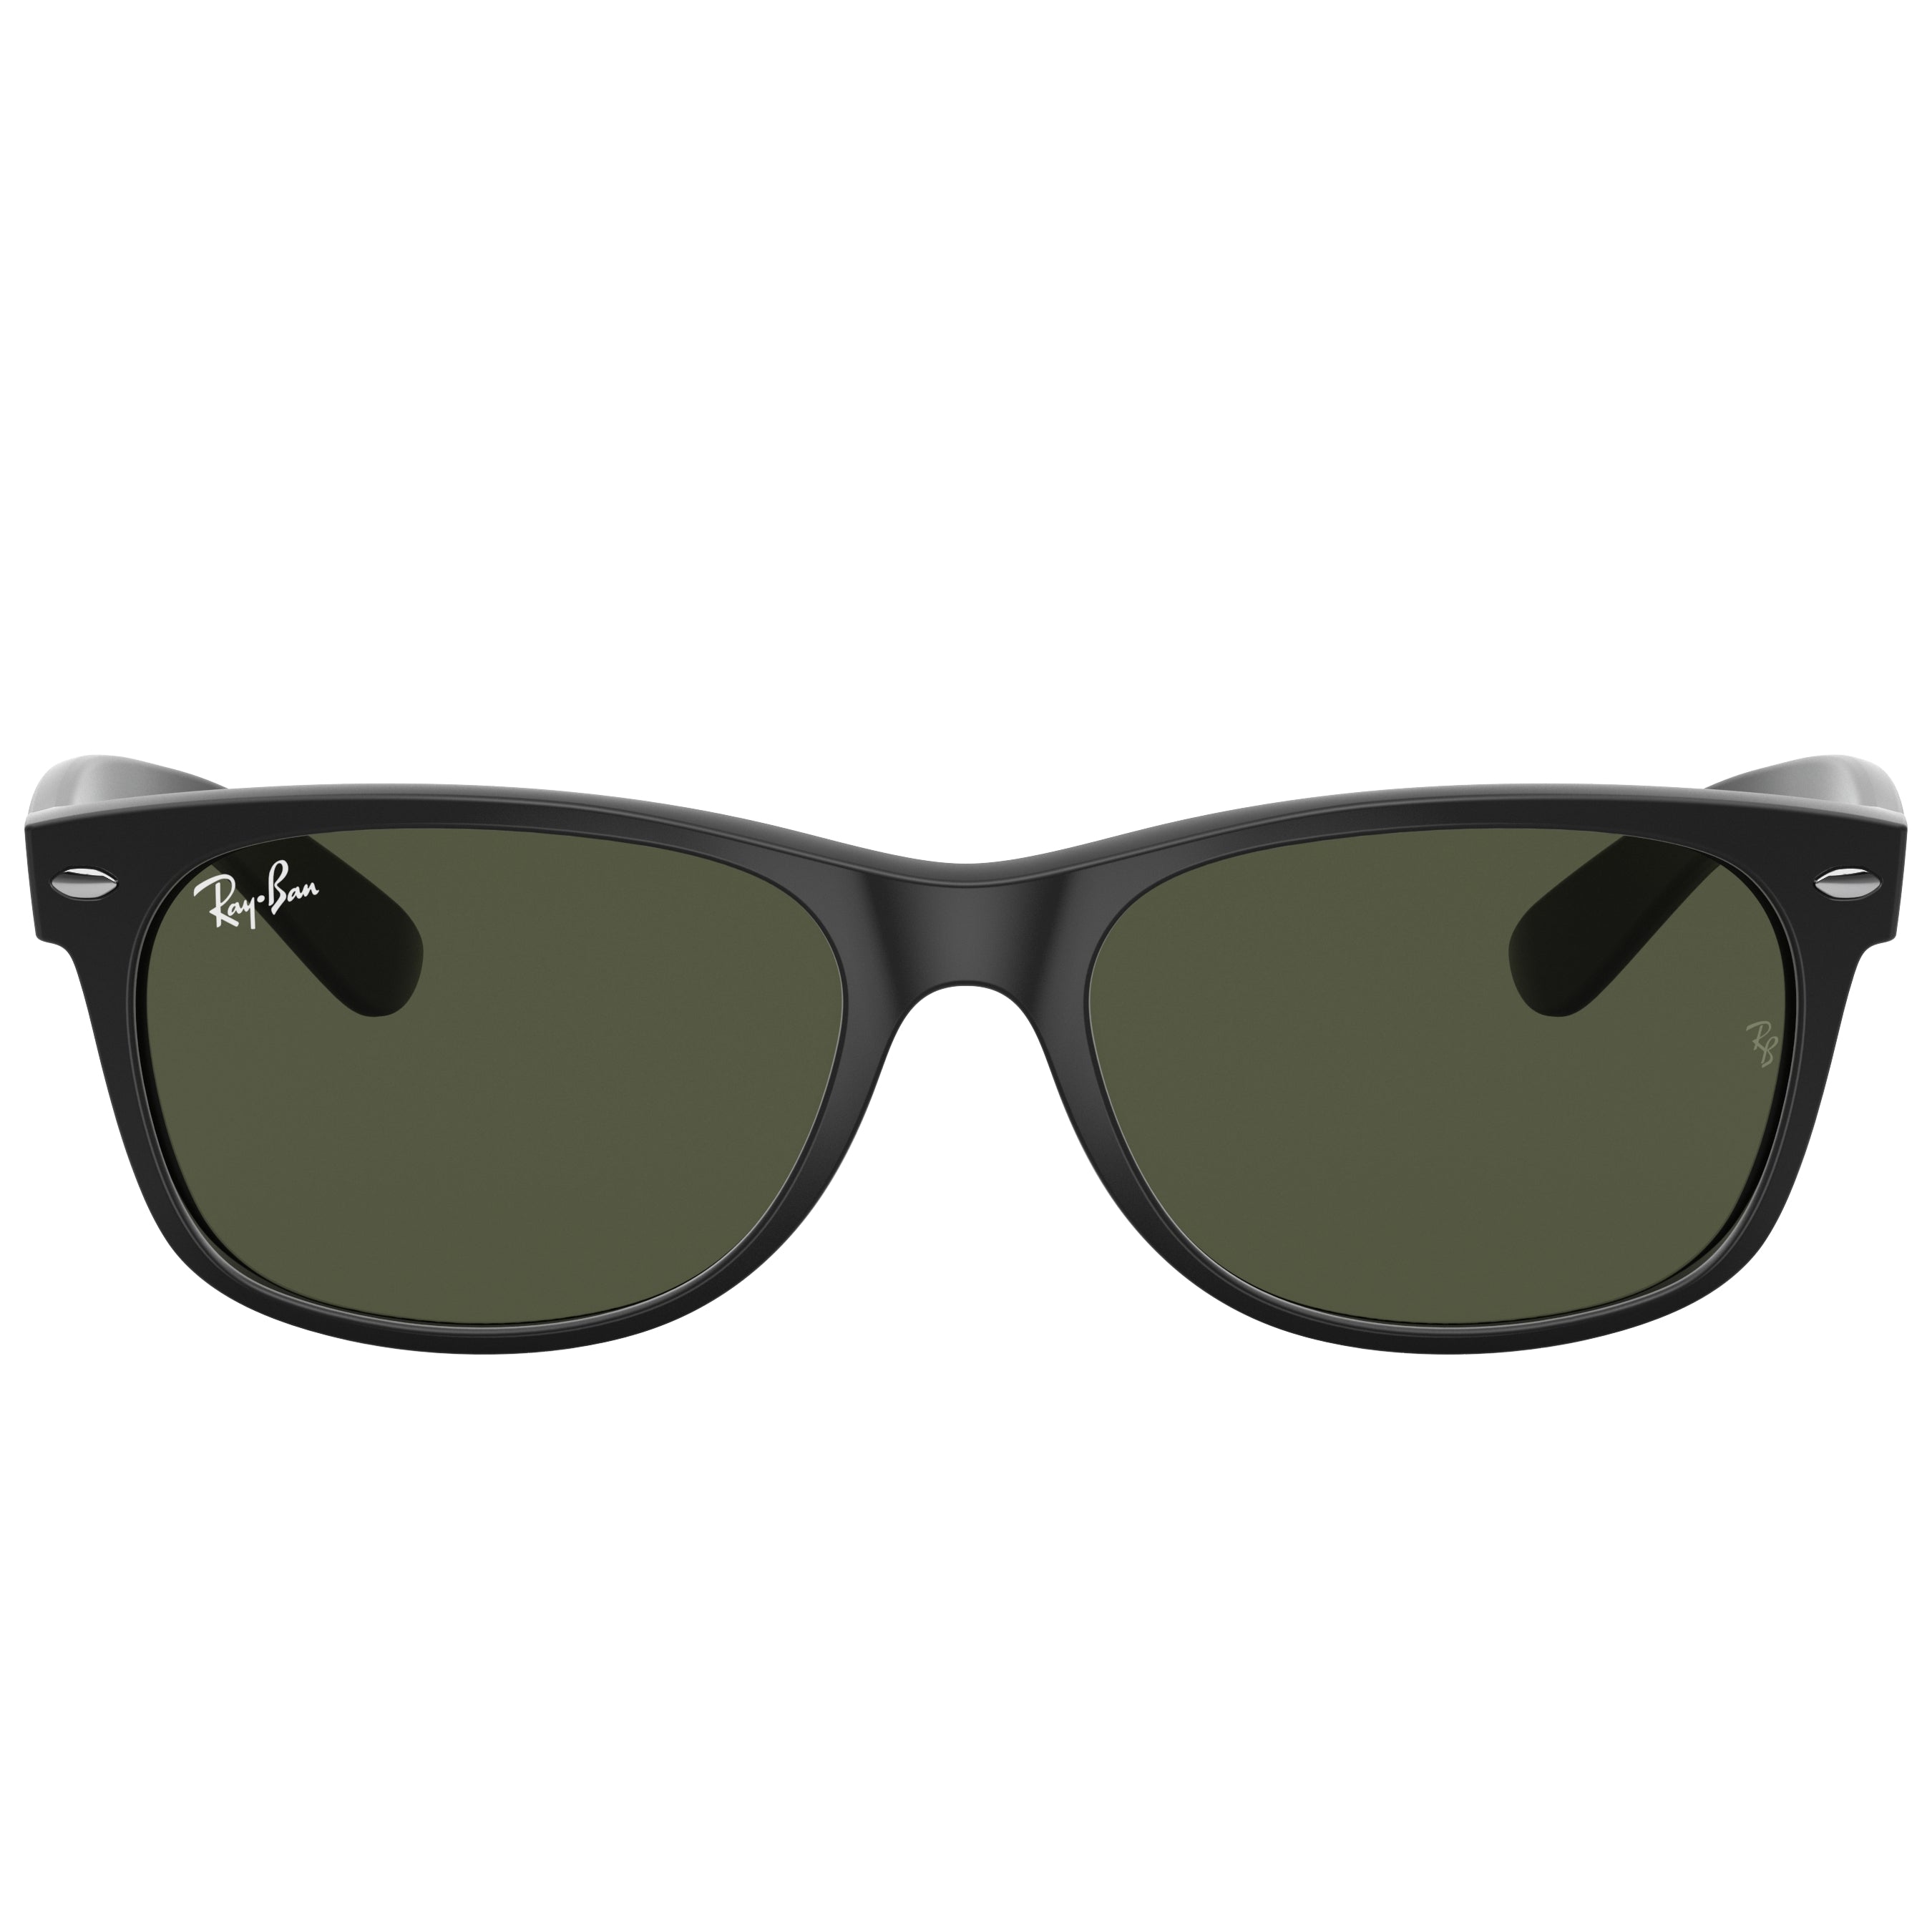 Ray-Ban New Wayfarer Wayfarer Men's Sunglasses RB2132 622 52-18